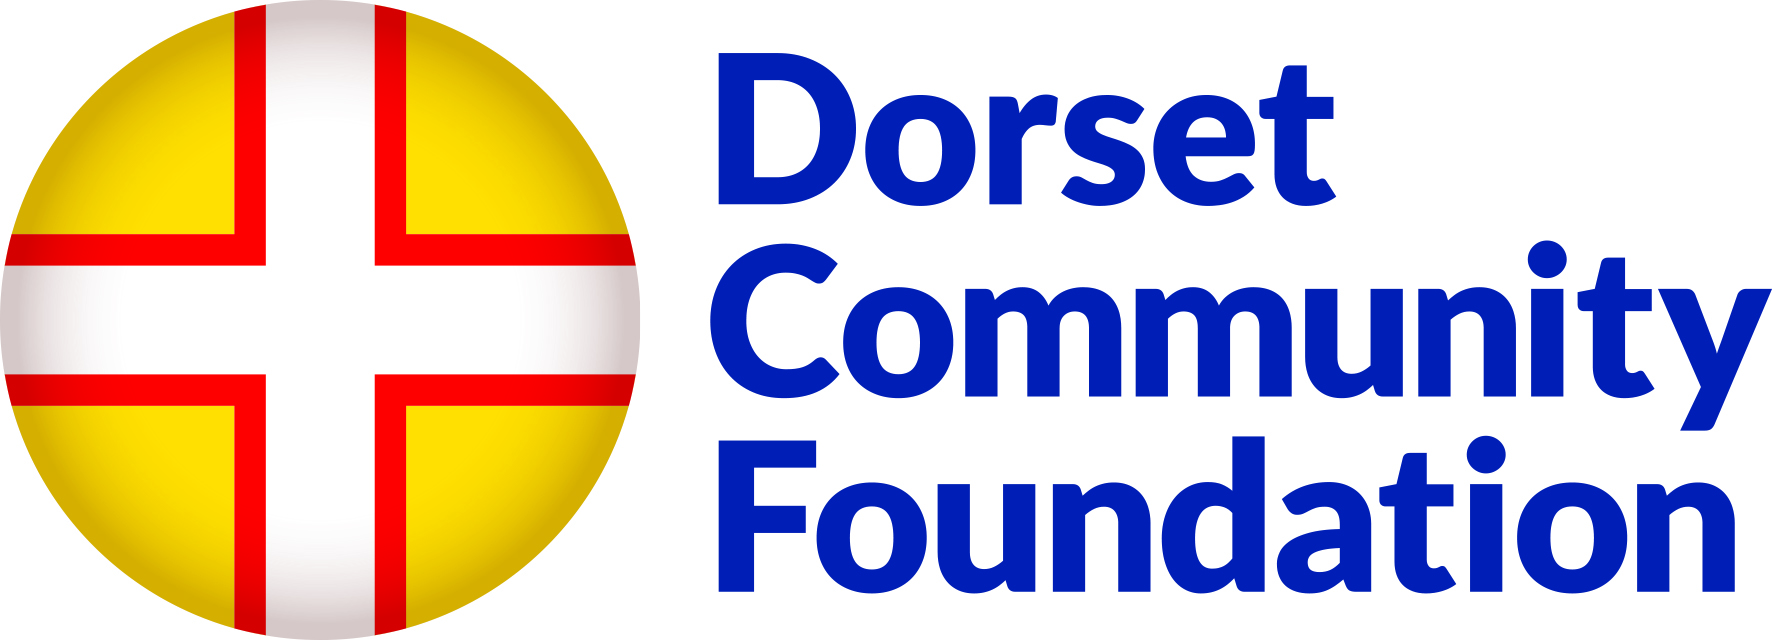 Dorset Community Foundation